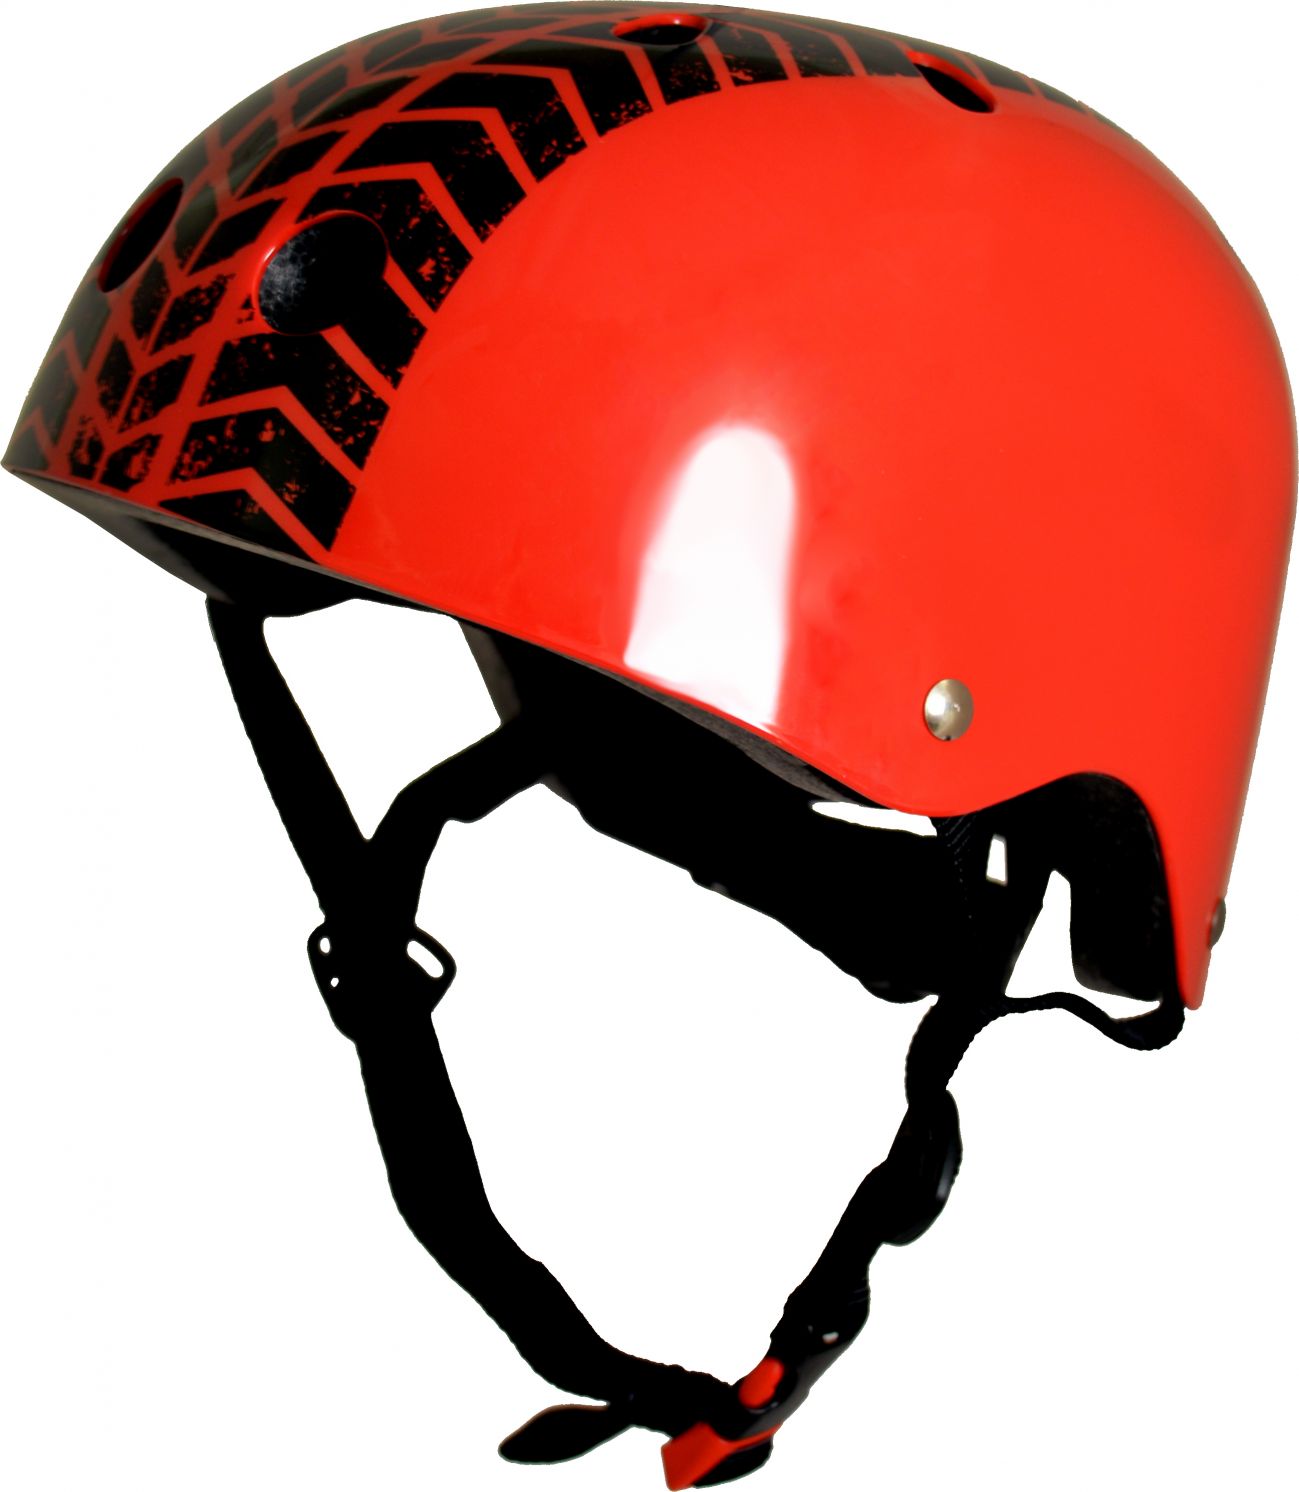 Шлем детский Kiddimoto с рисунком протектора, красный, размер S 48-53см фото 